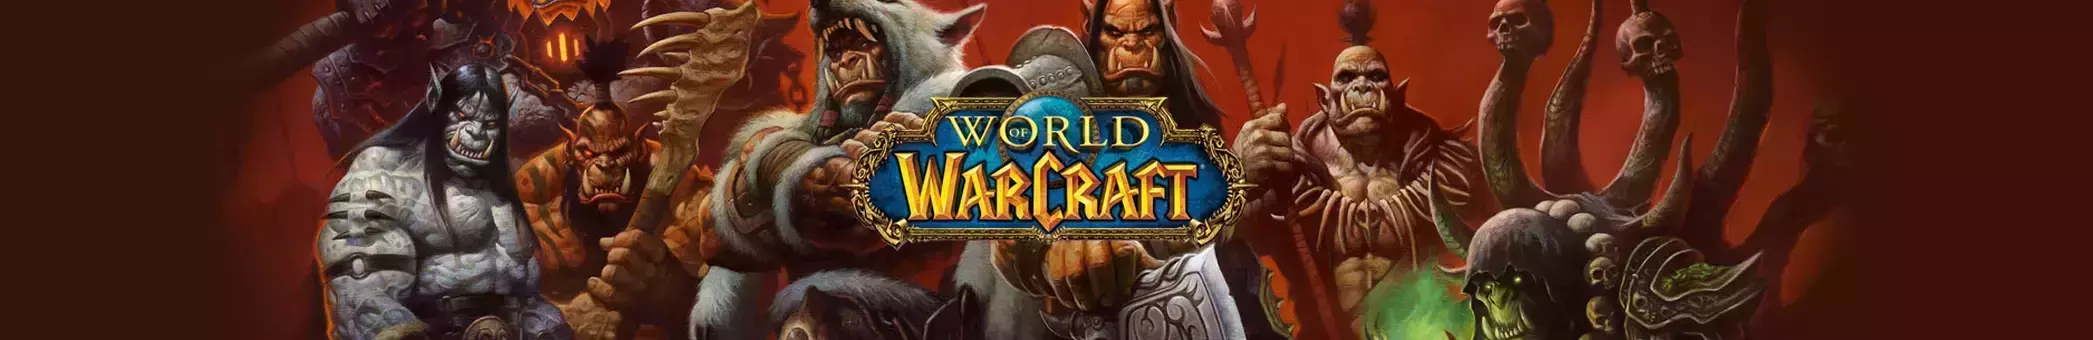 World of Warcraft Digital Edition